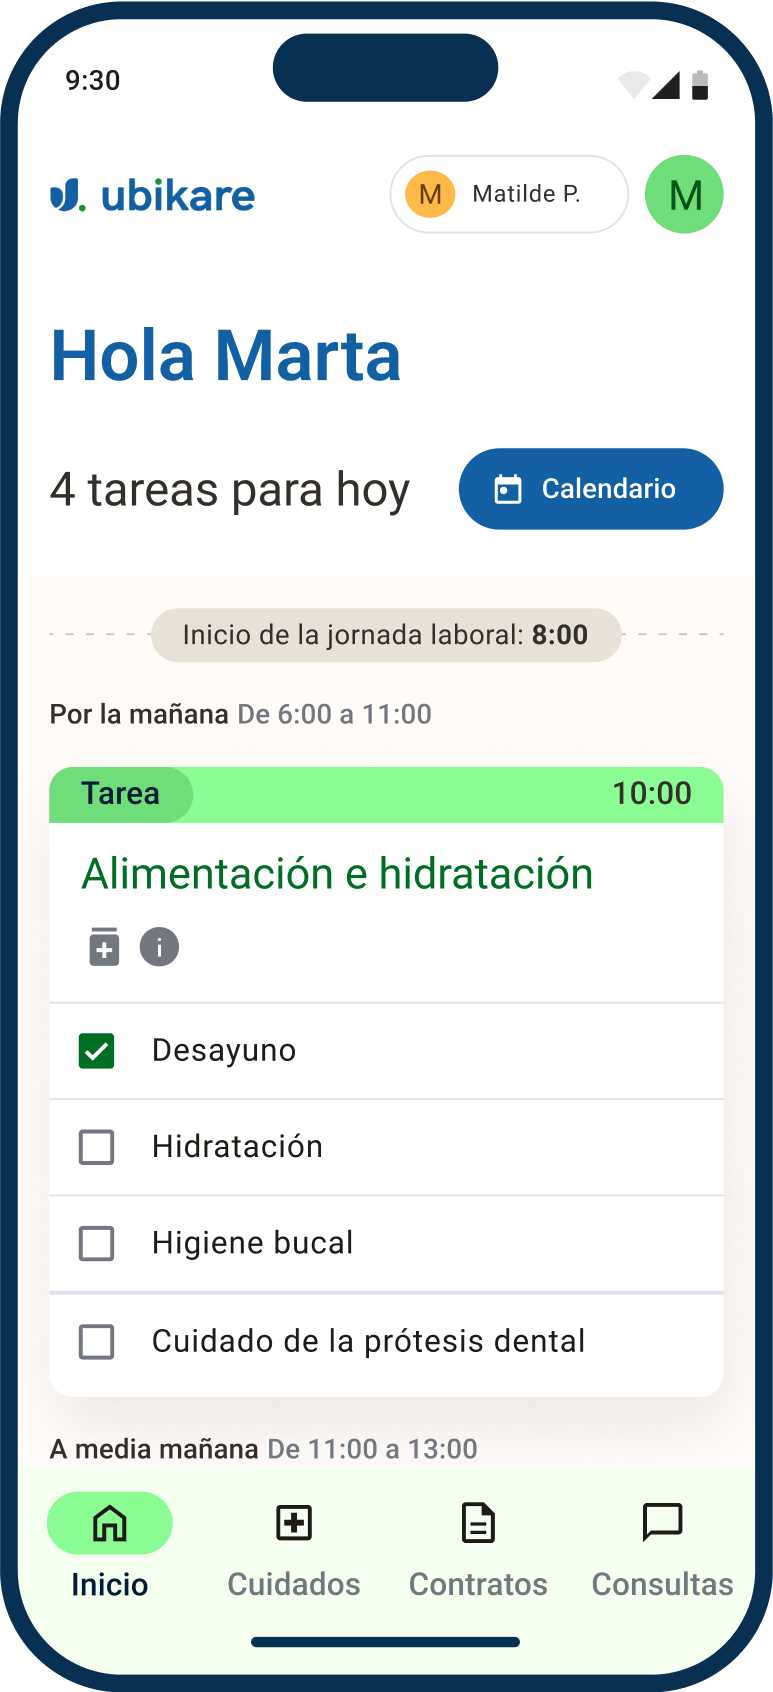 Ubikare app, main screen showing tasks